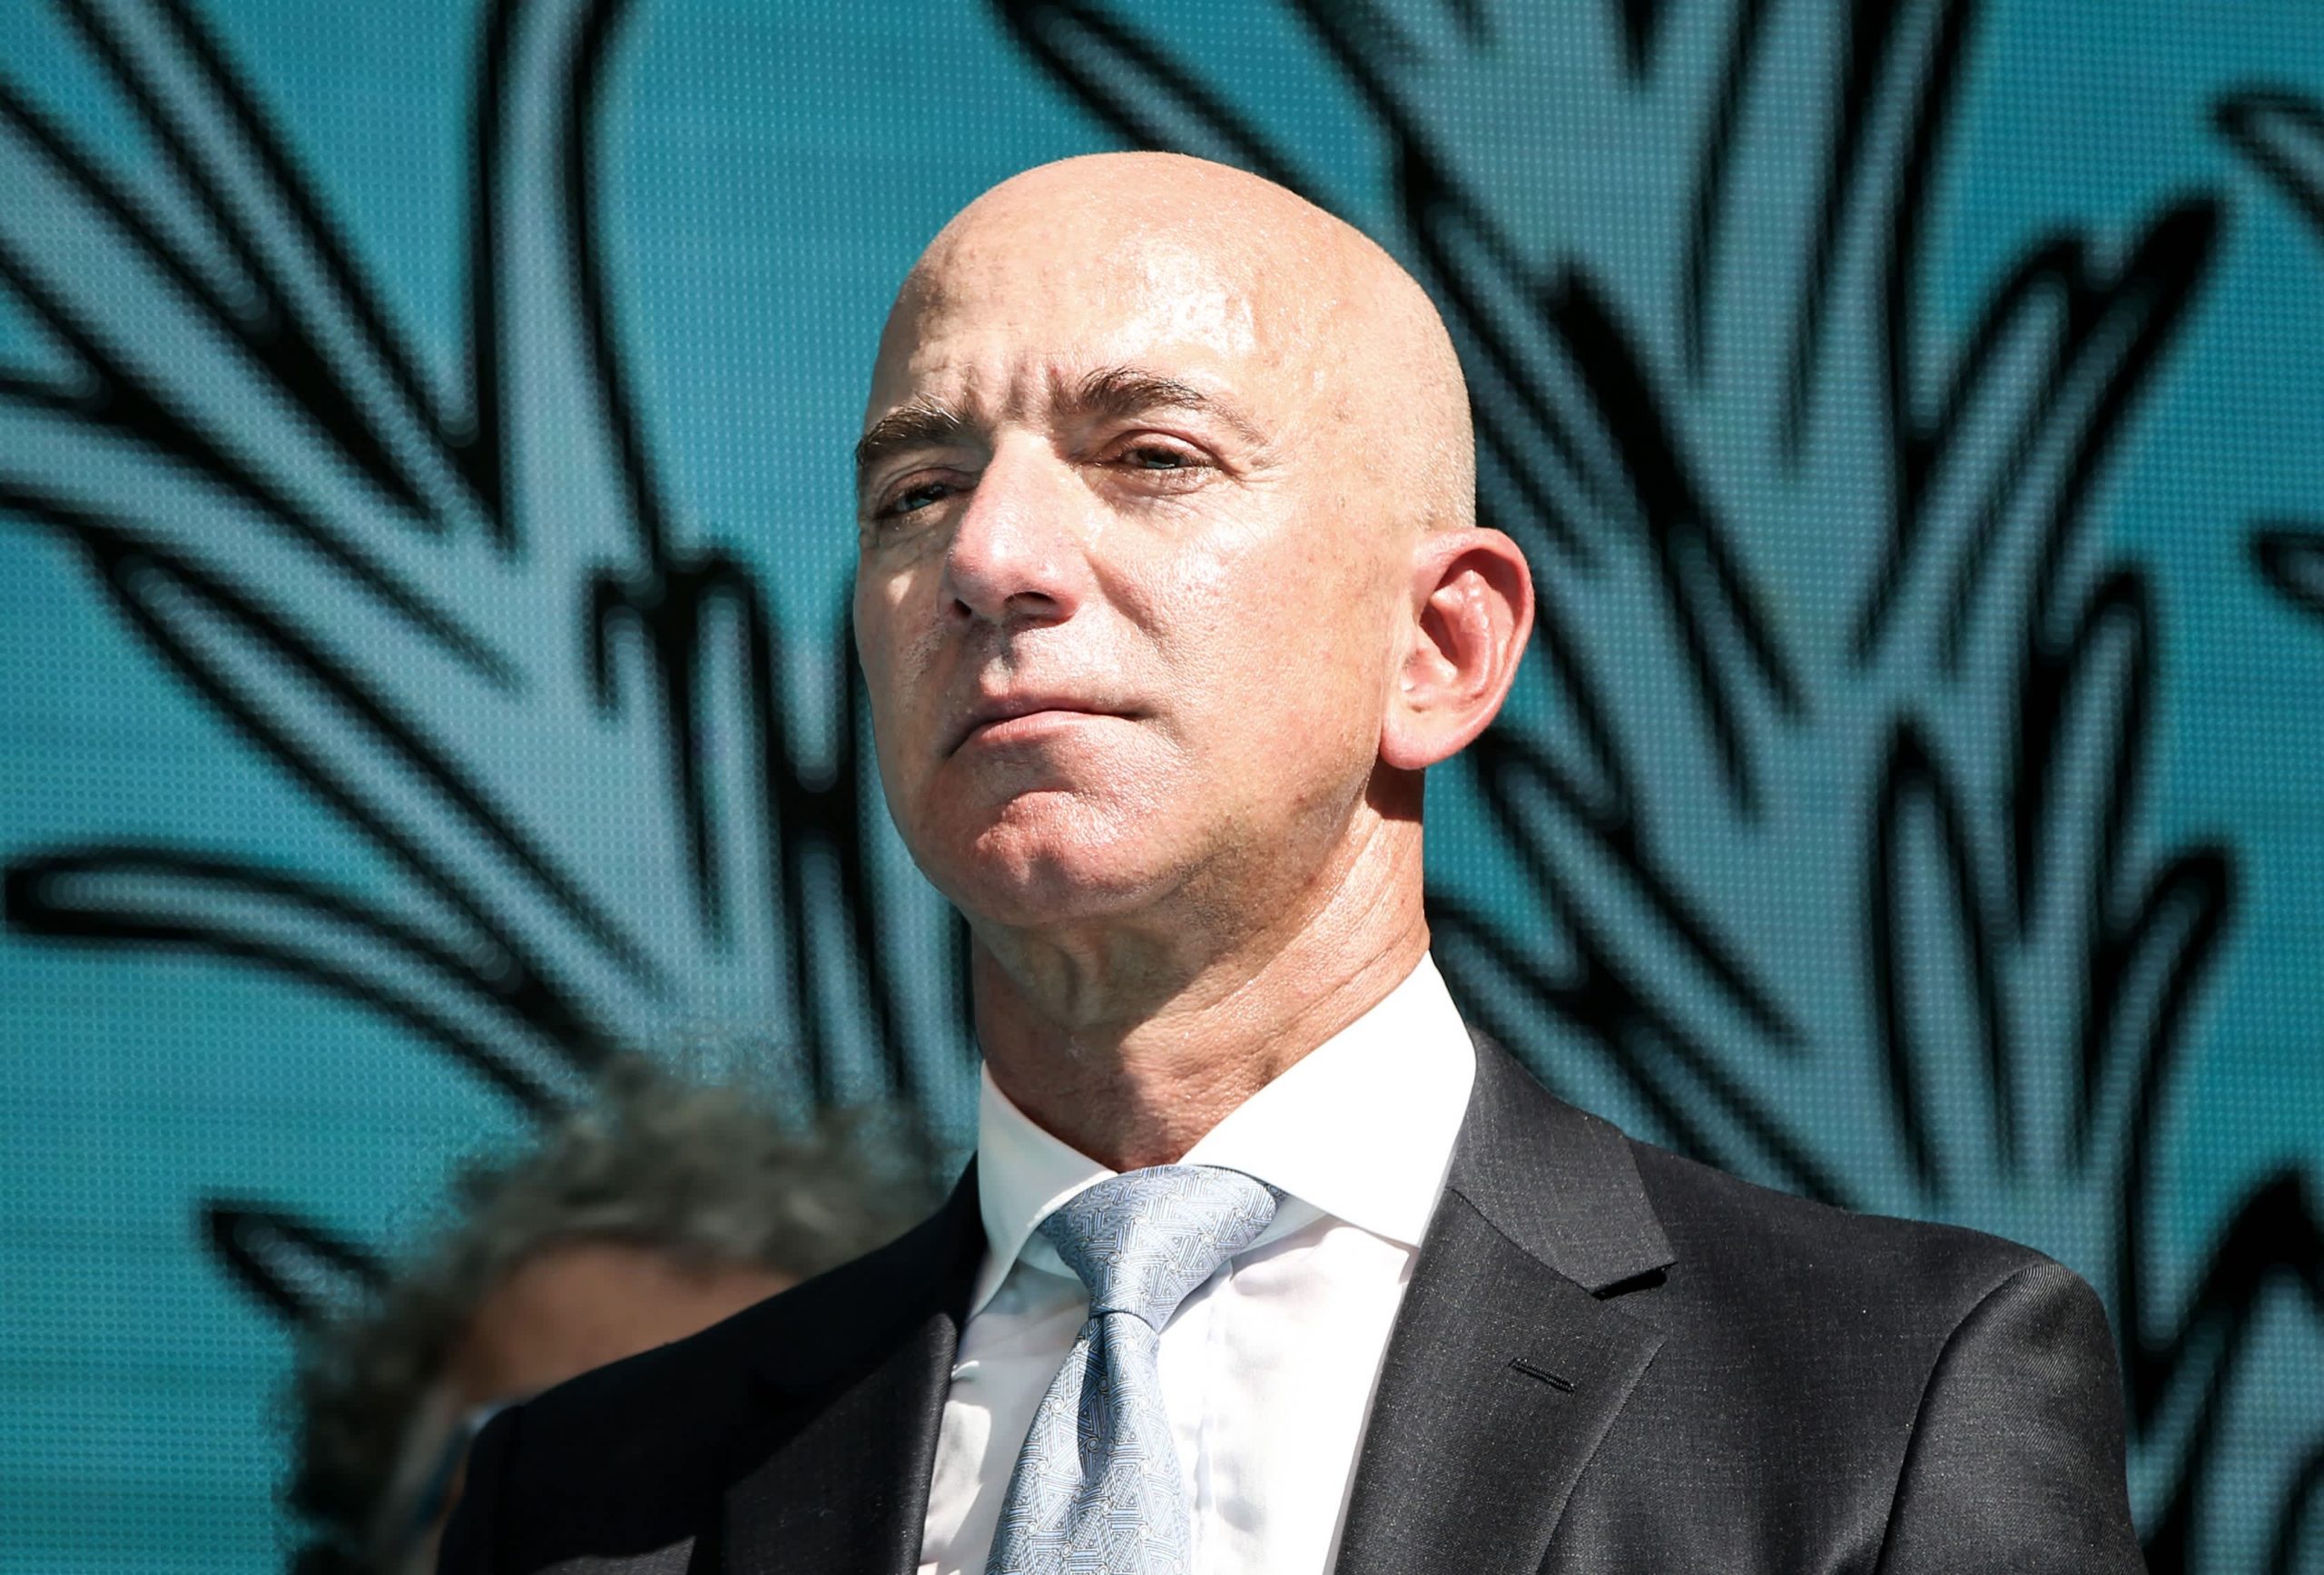 Jeff Bezos would owe $2 billion in state taxes beneath Washington wealth tax